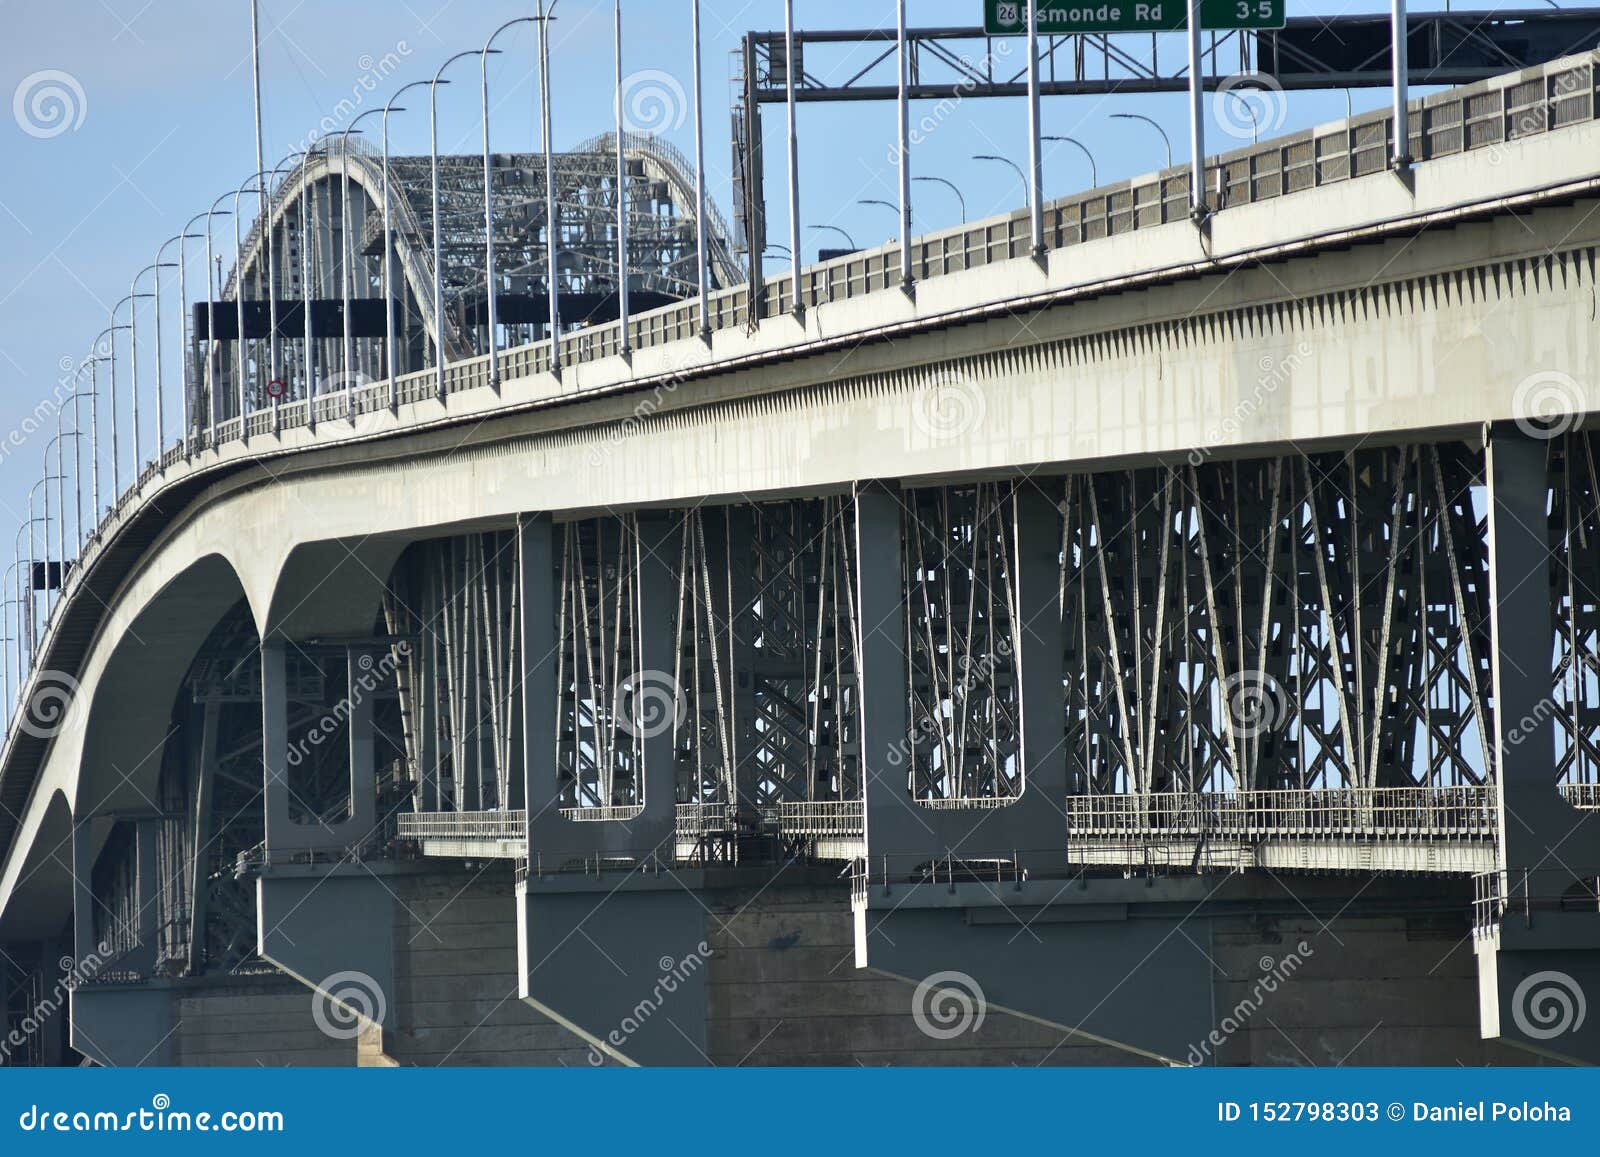 steel and concrete motorway bridge